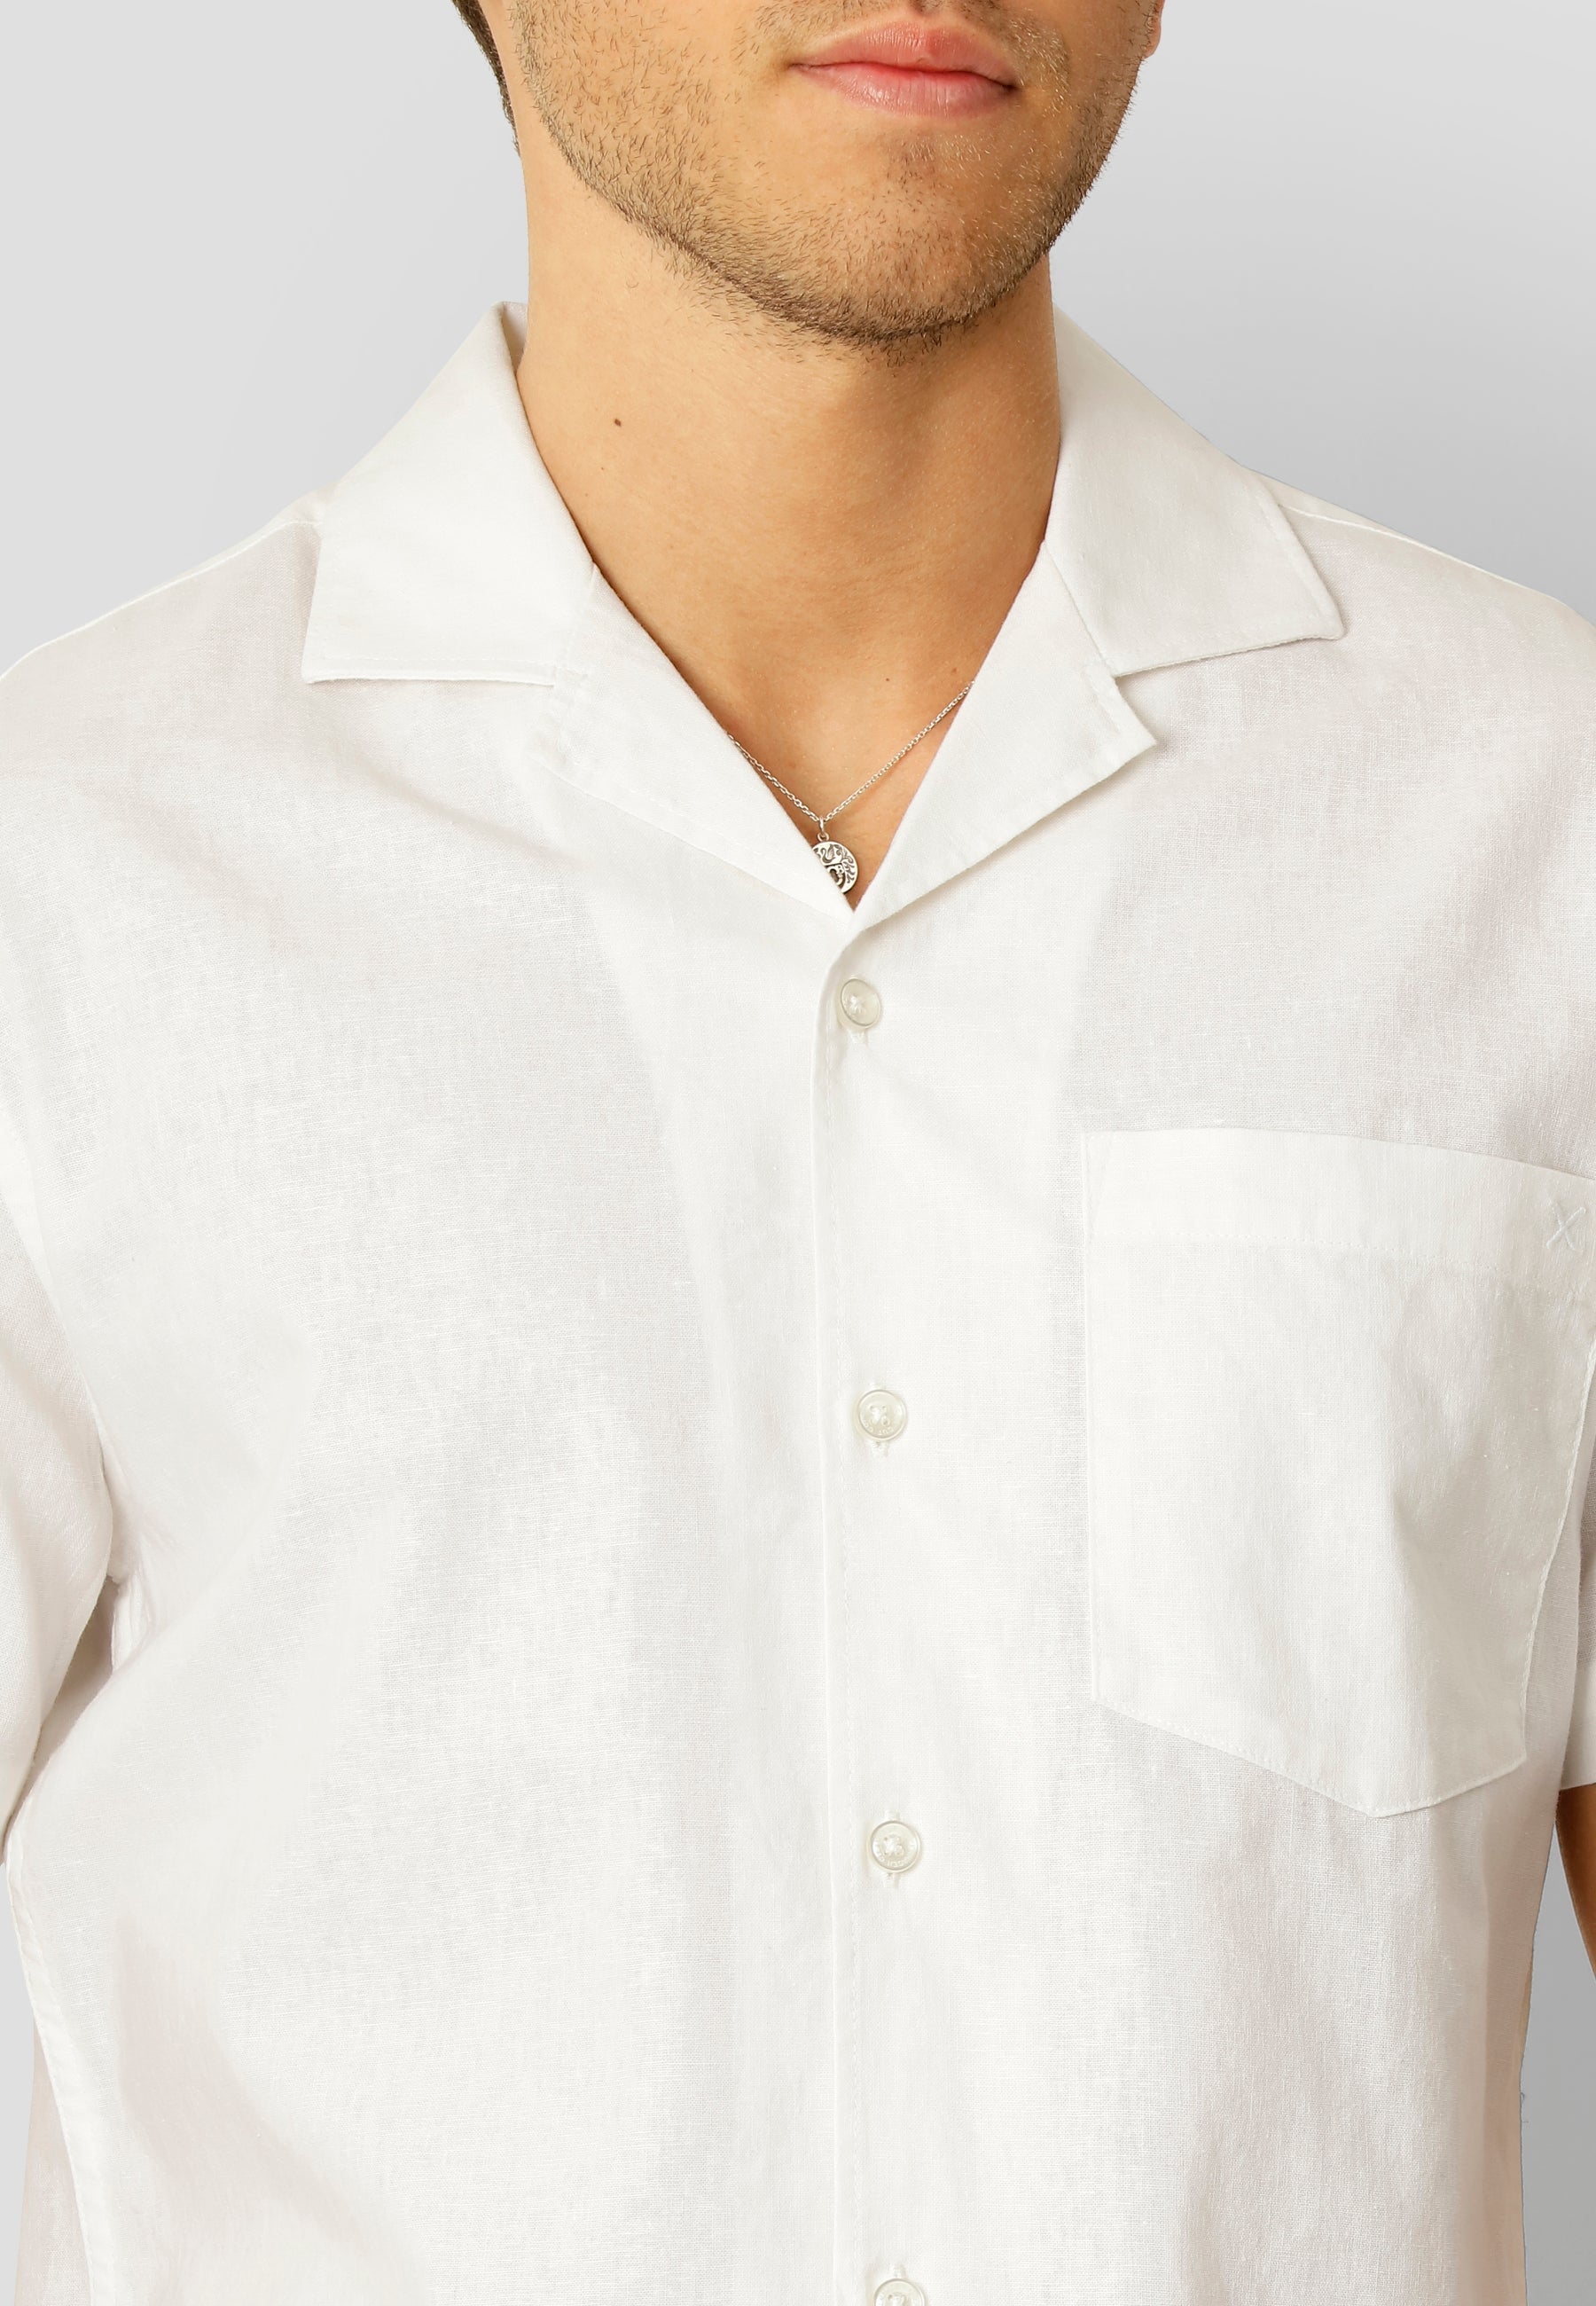 Bowling Cotton Linen Shirt S/S - White